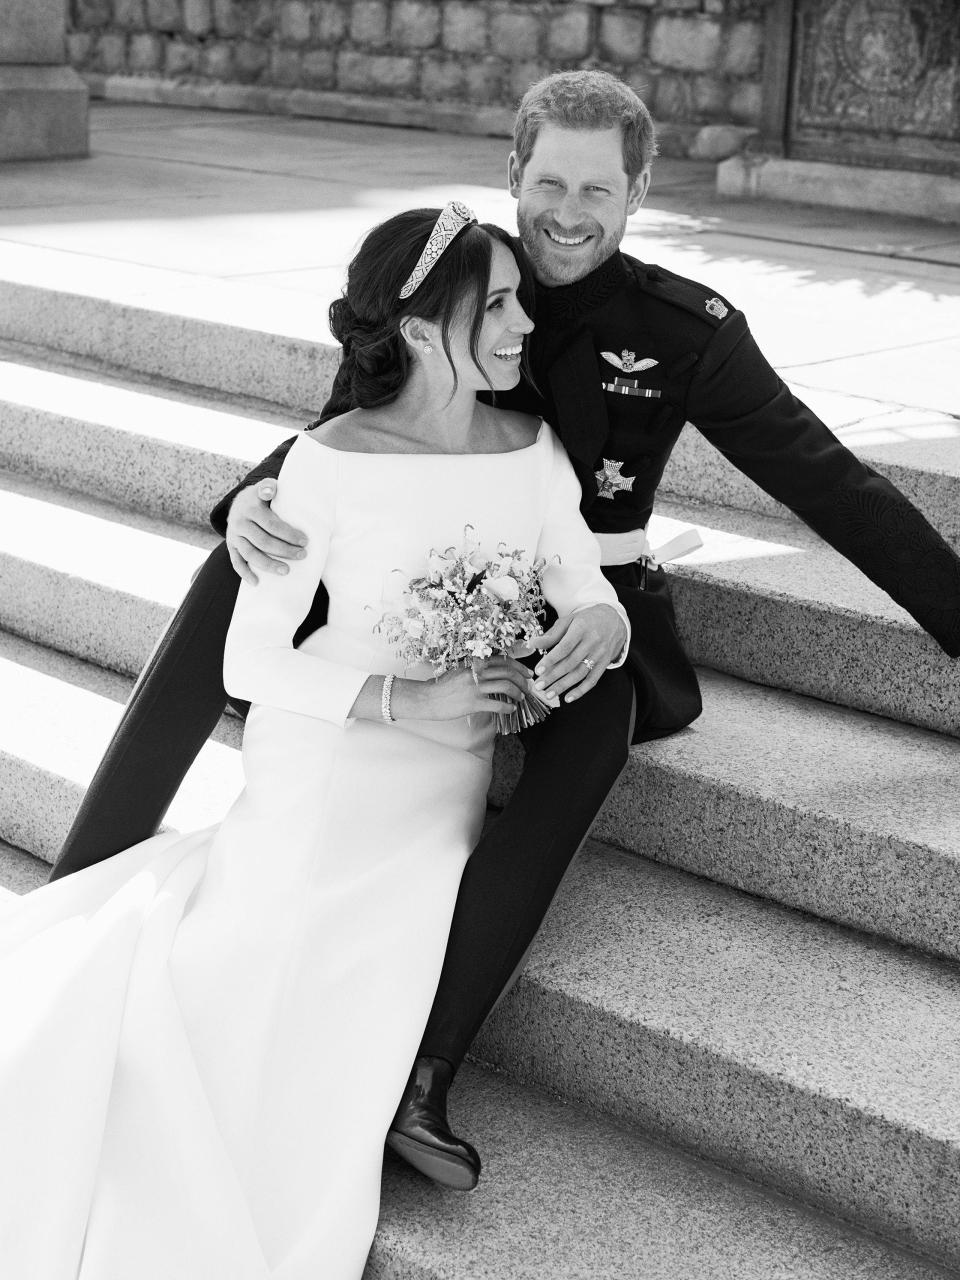 Wedding photos Prince Harry and Meghan Markle